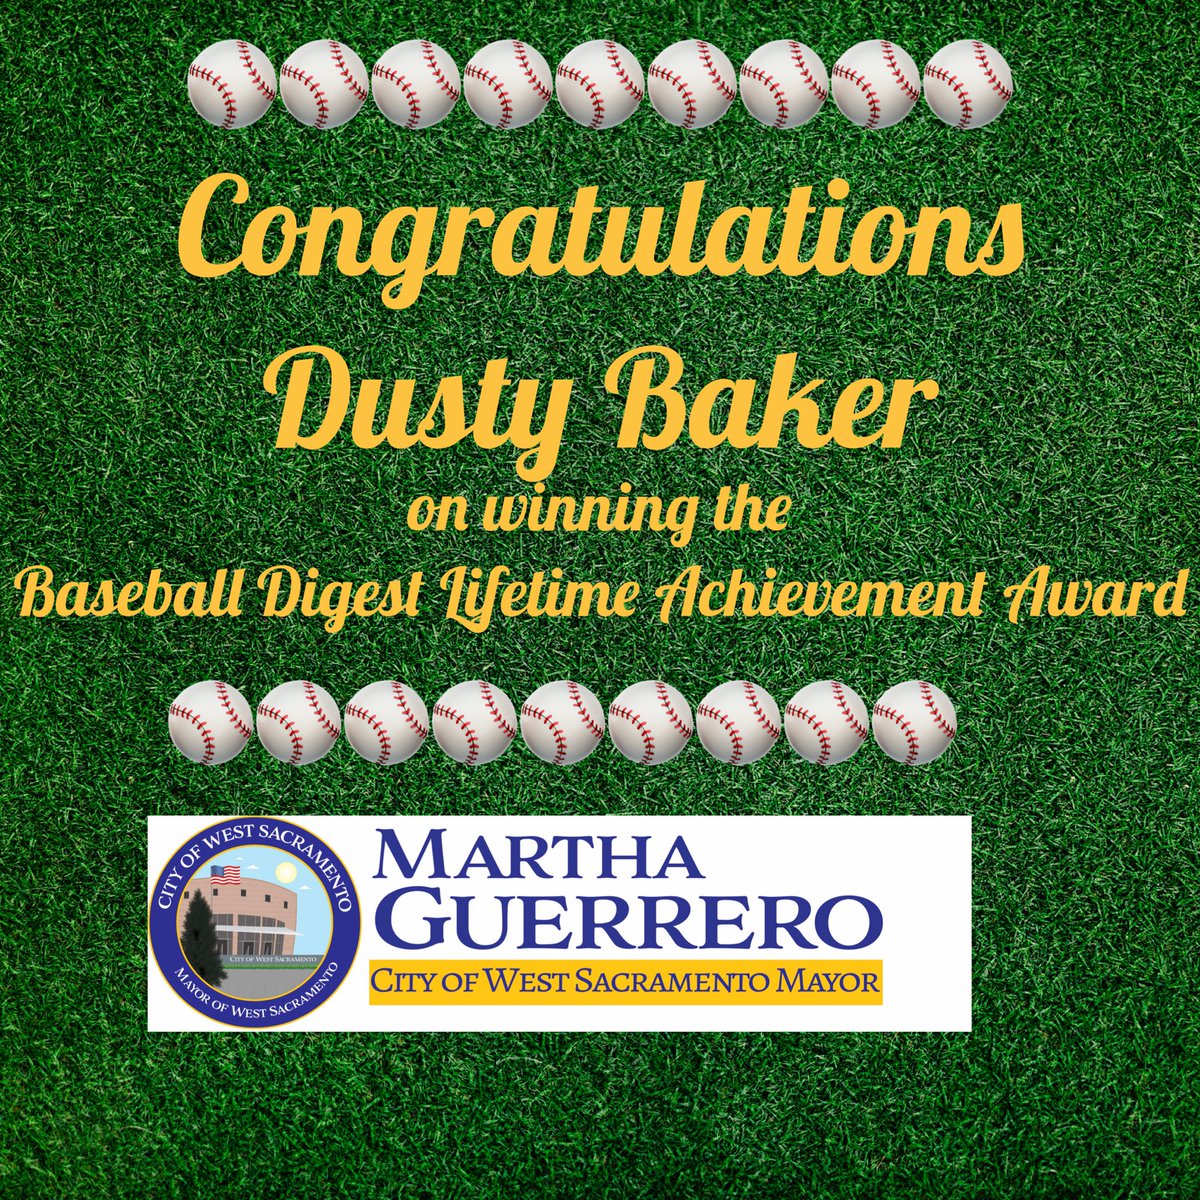 Dusty Baker wins Baseball Digest lifetime achievement award espn.com/mlb/story/_/id…